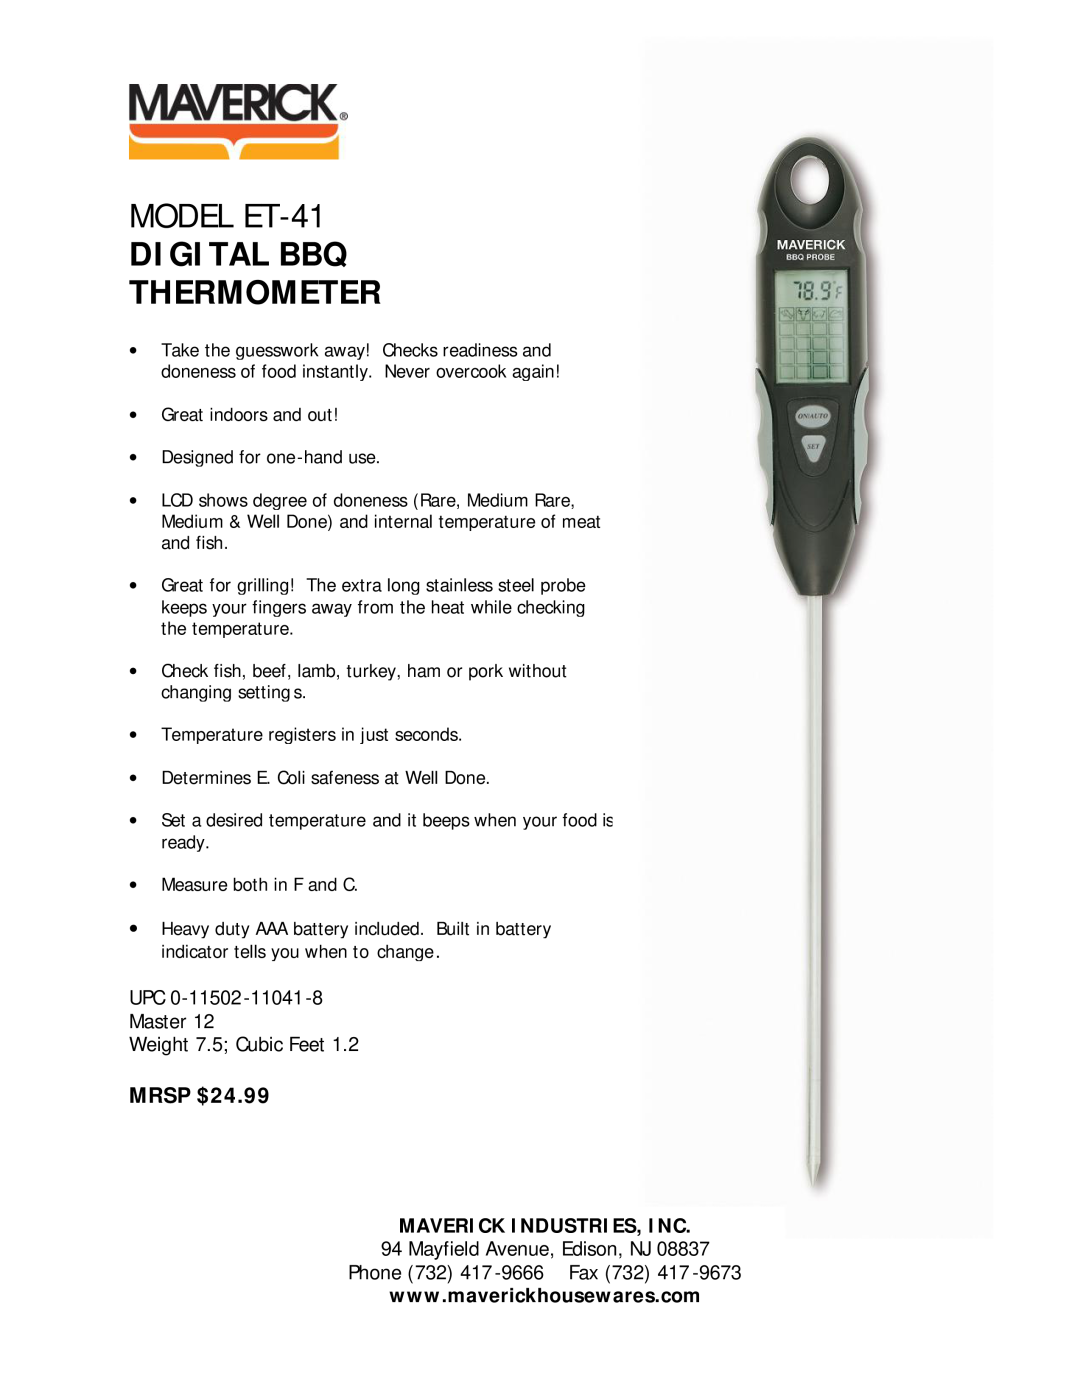 Maverick Ventures manual MODEL ET-41, Digital Bbq Thermometer, MRSP $24.99, Maverick Industries, Inc 